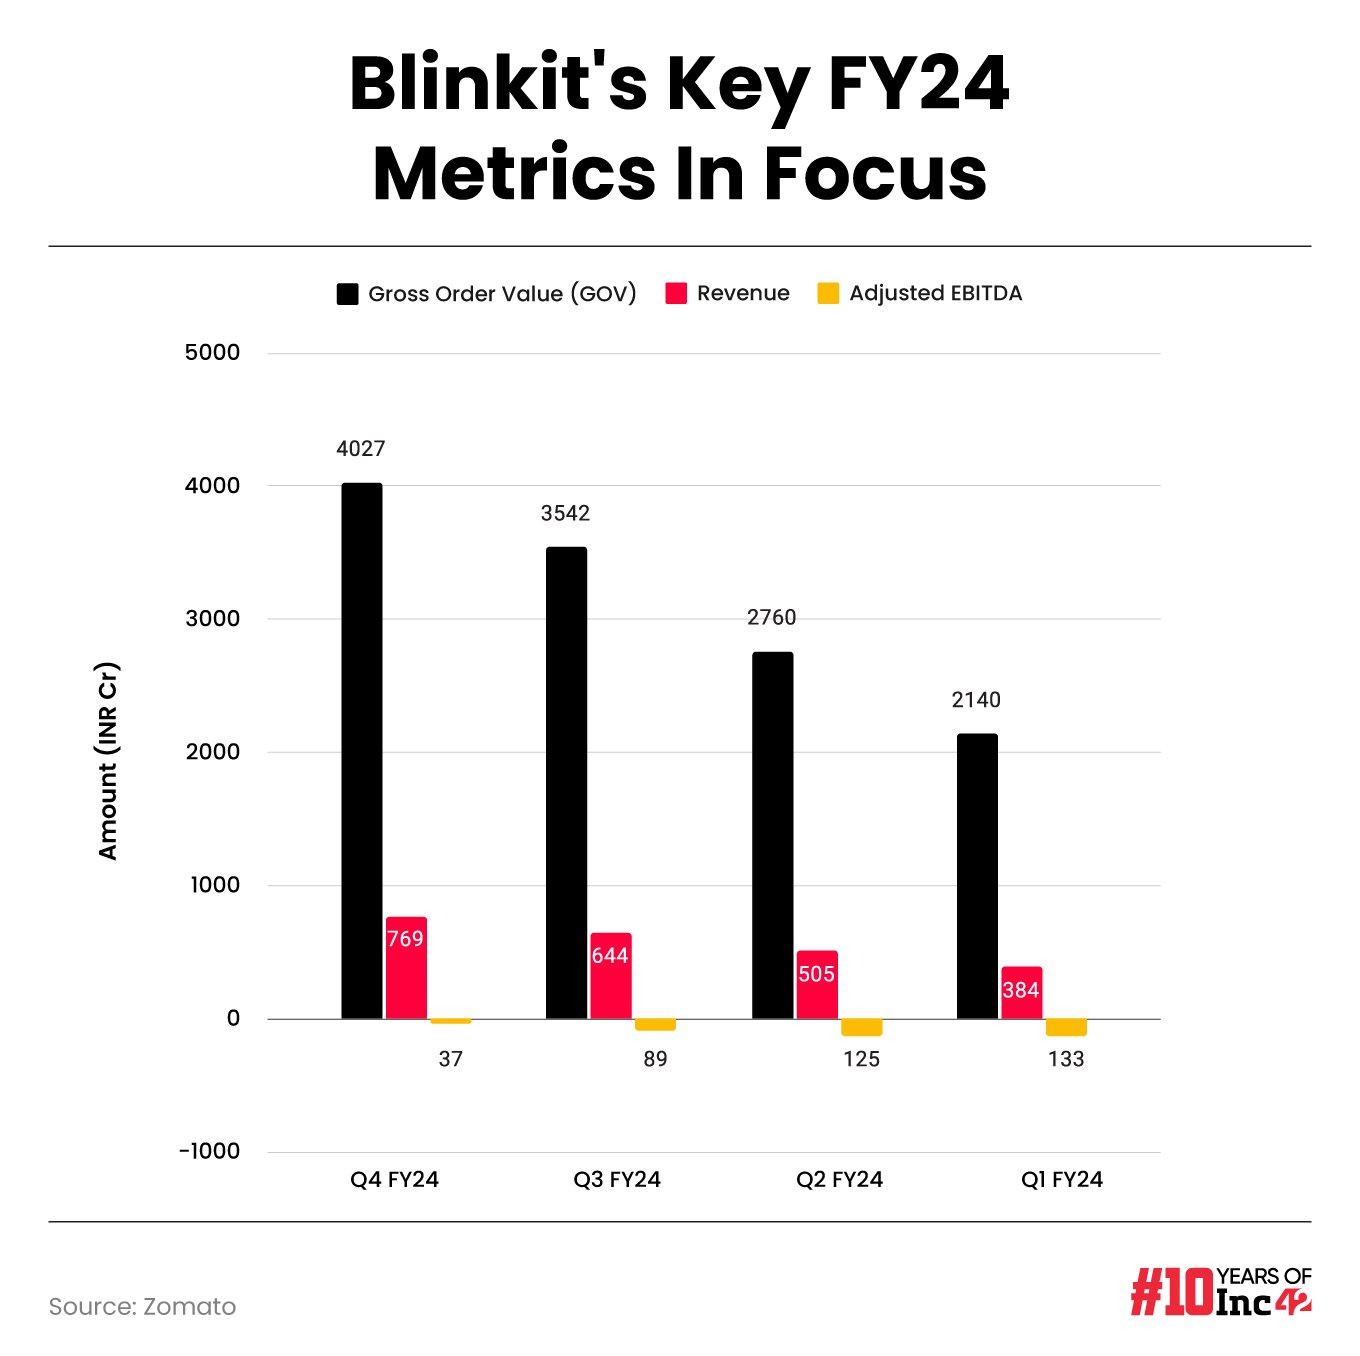 Blinkit quarterly revenue growth in fy24